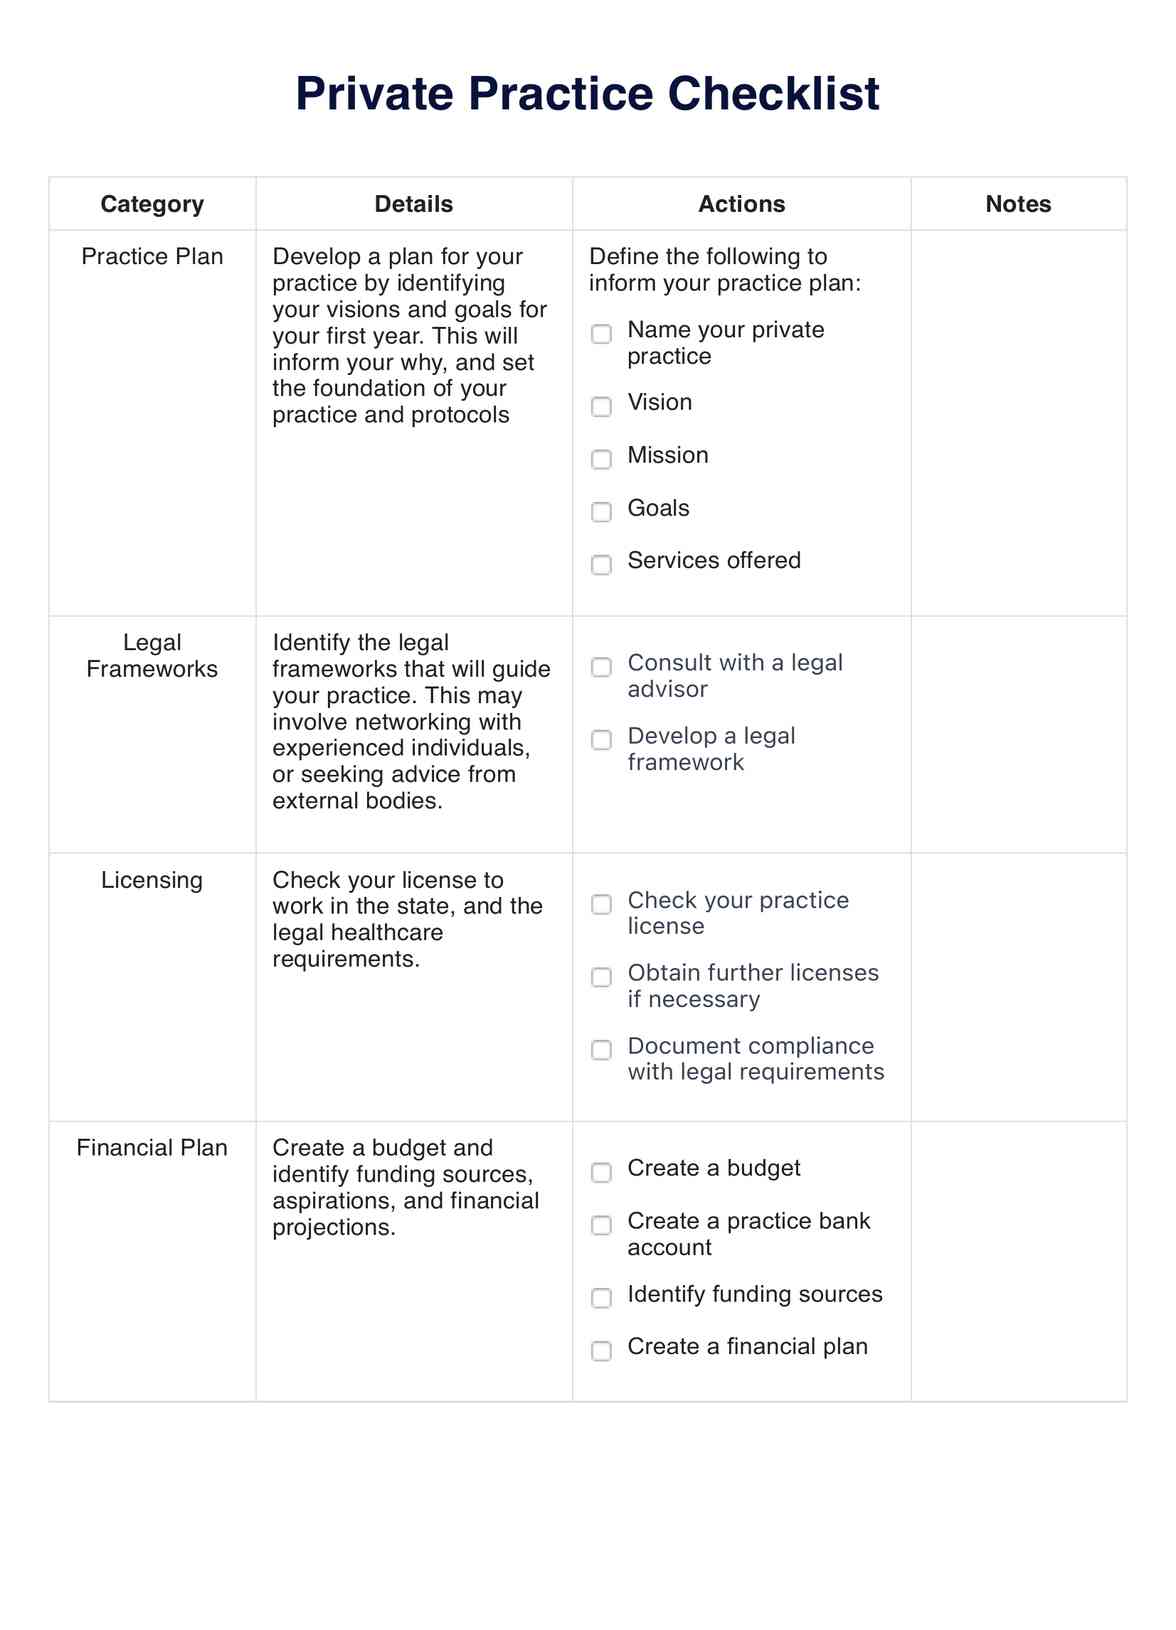 Private Practice Checklist PDF Example